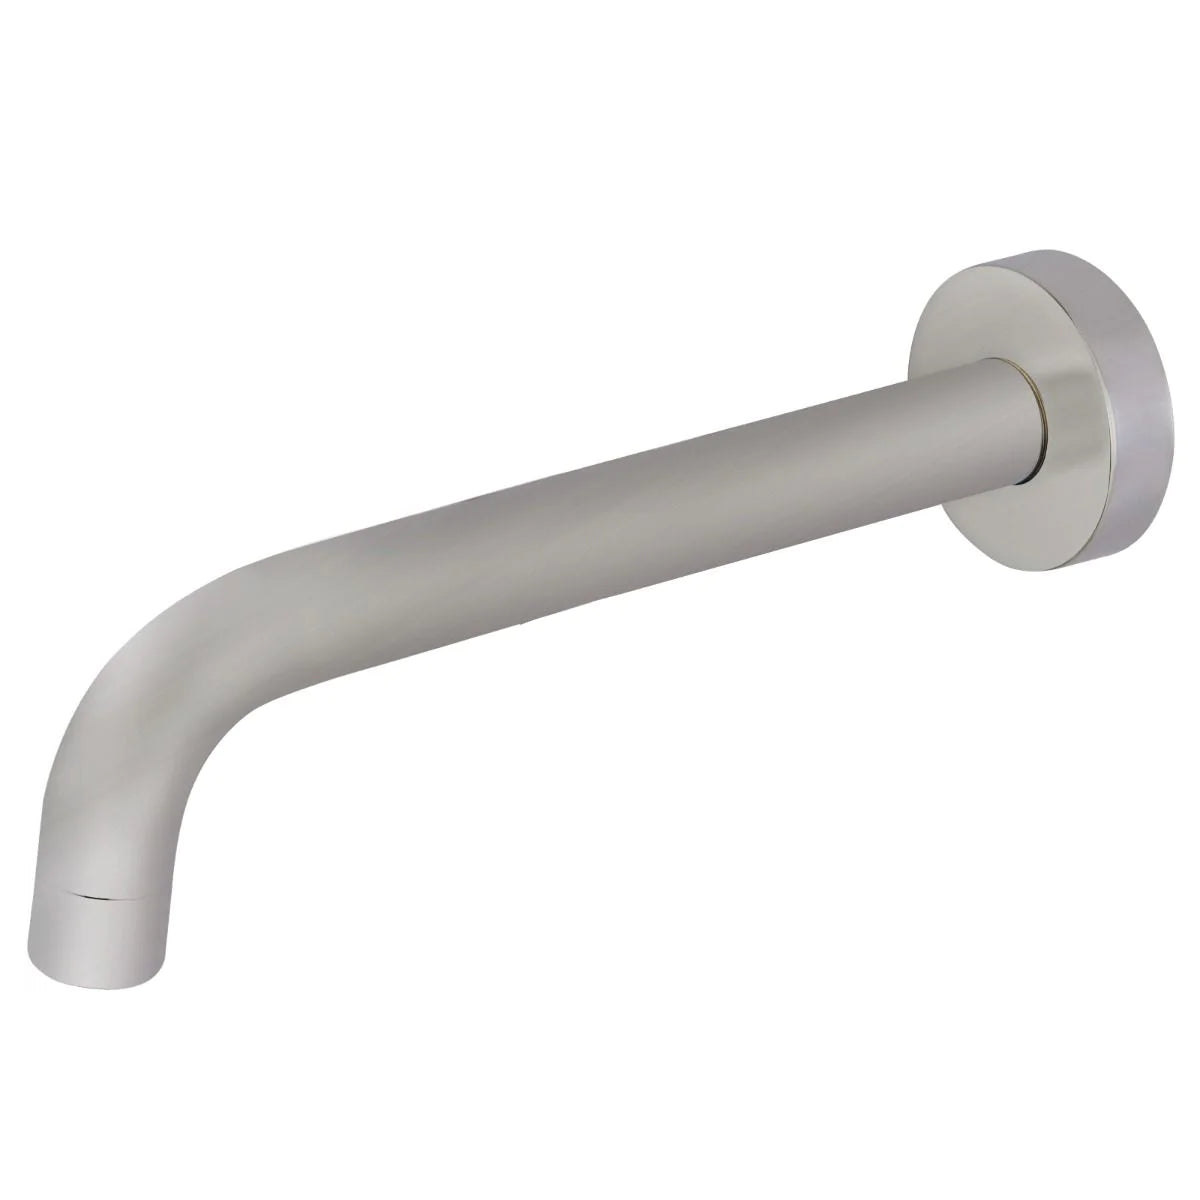 Pentro Round Bath Spout - SP12: Modern, minimalist design for enhancing your bathroom space-SP12.05